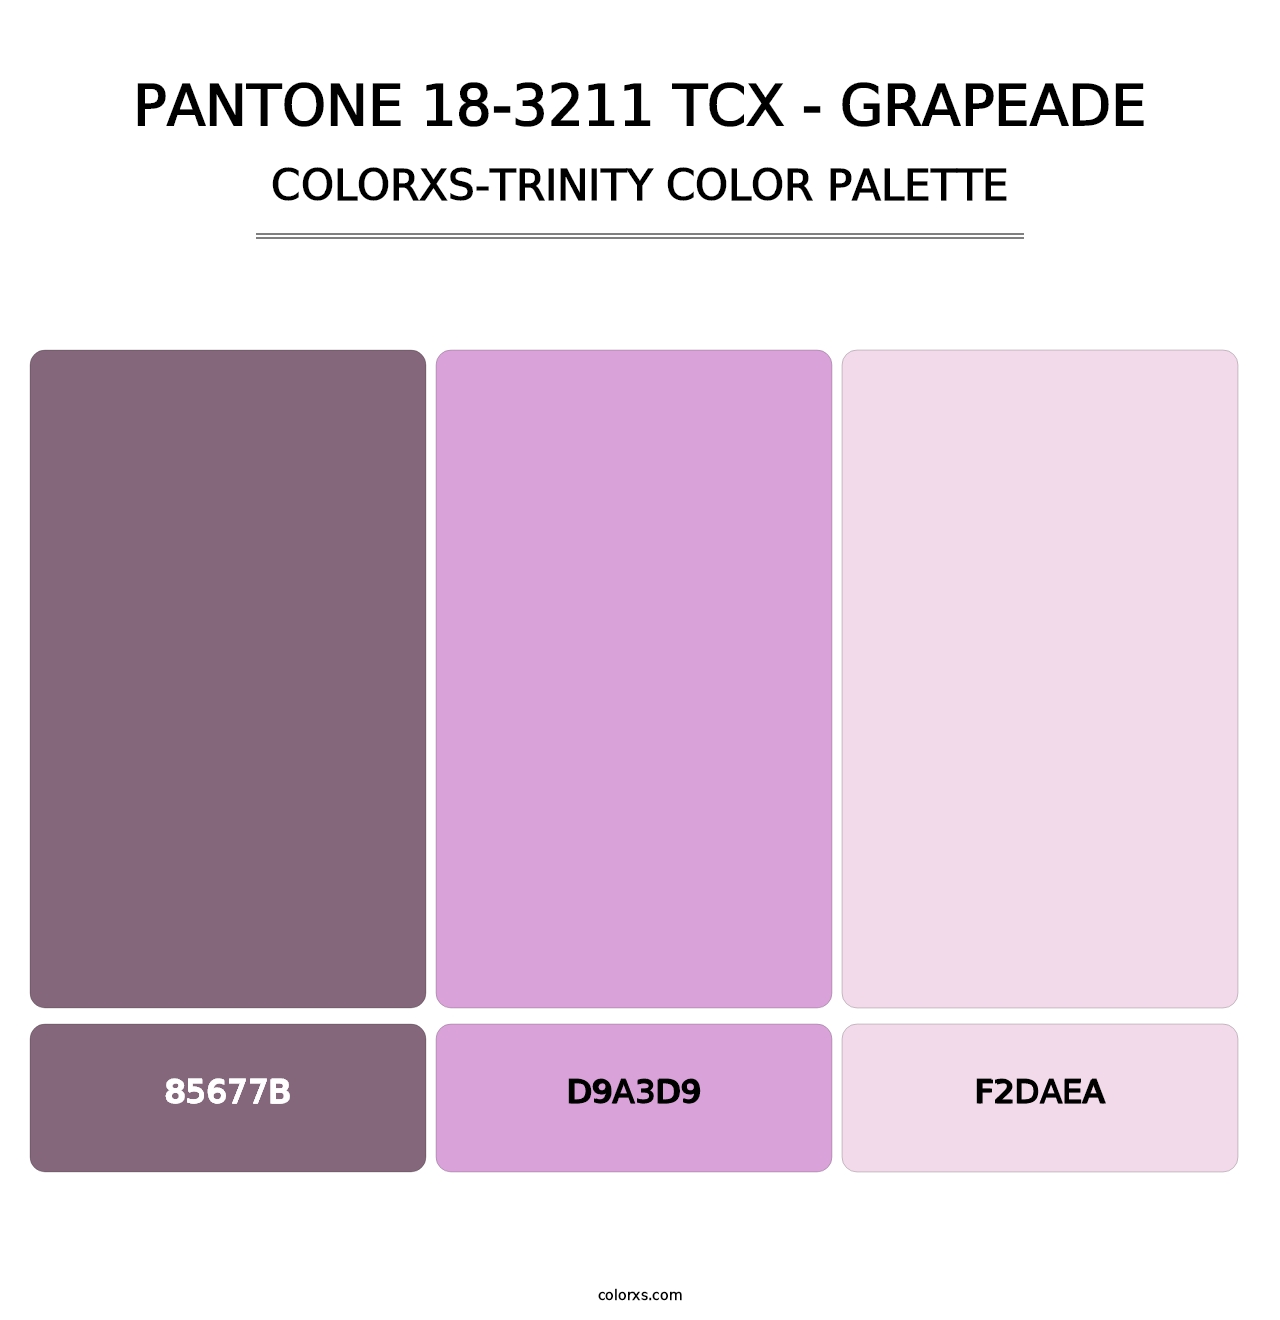 PANTONE 18-3211 TCX - Grapeade - Colorxs Trinity Palette